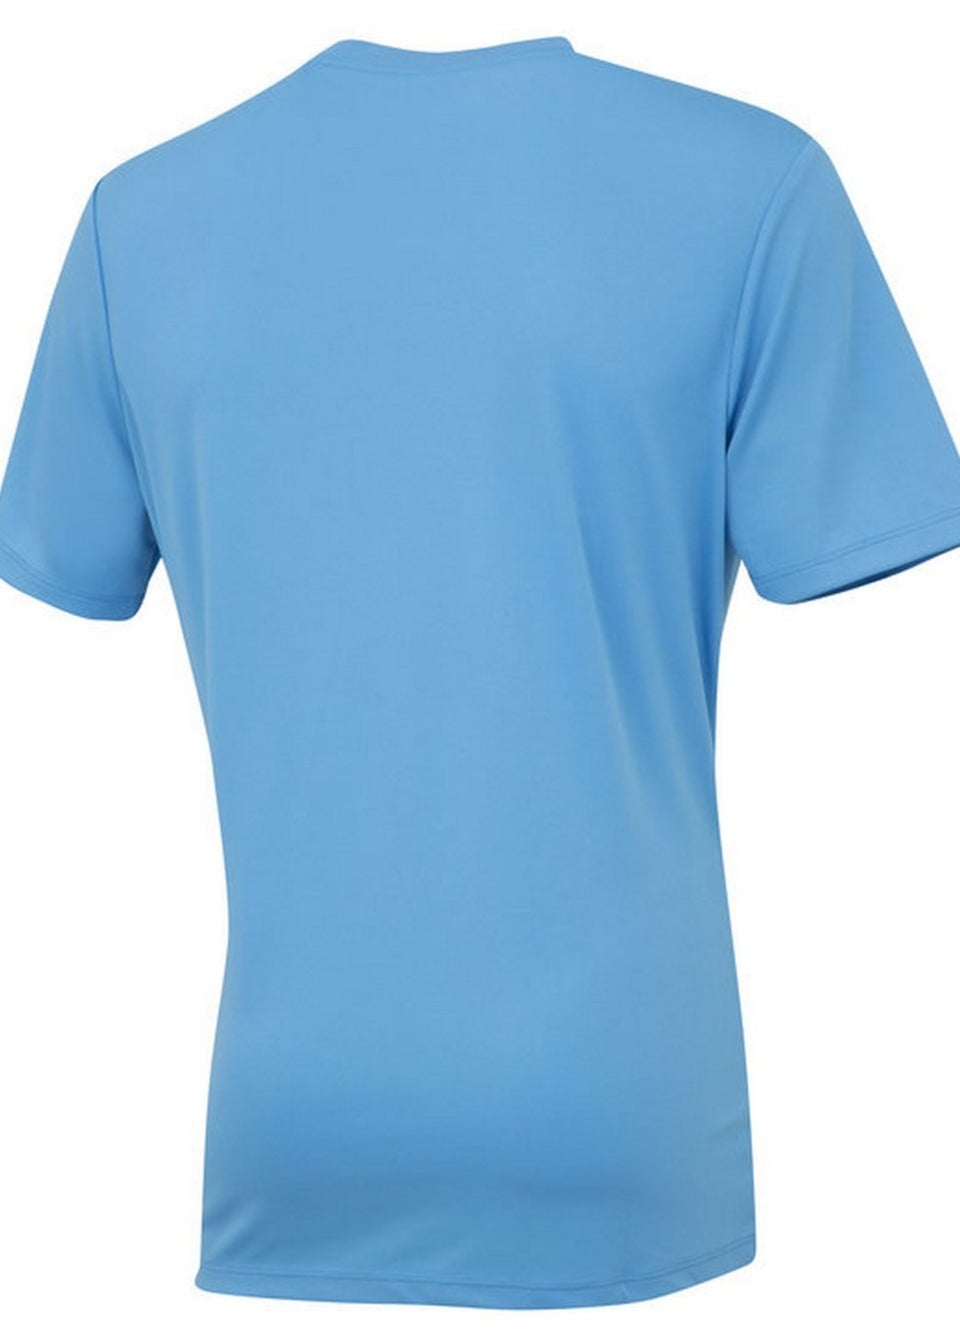 Umbro Sky Blue Club Short-Sleeved Jersey